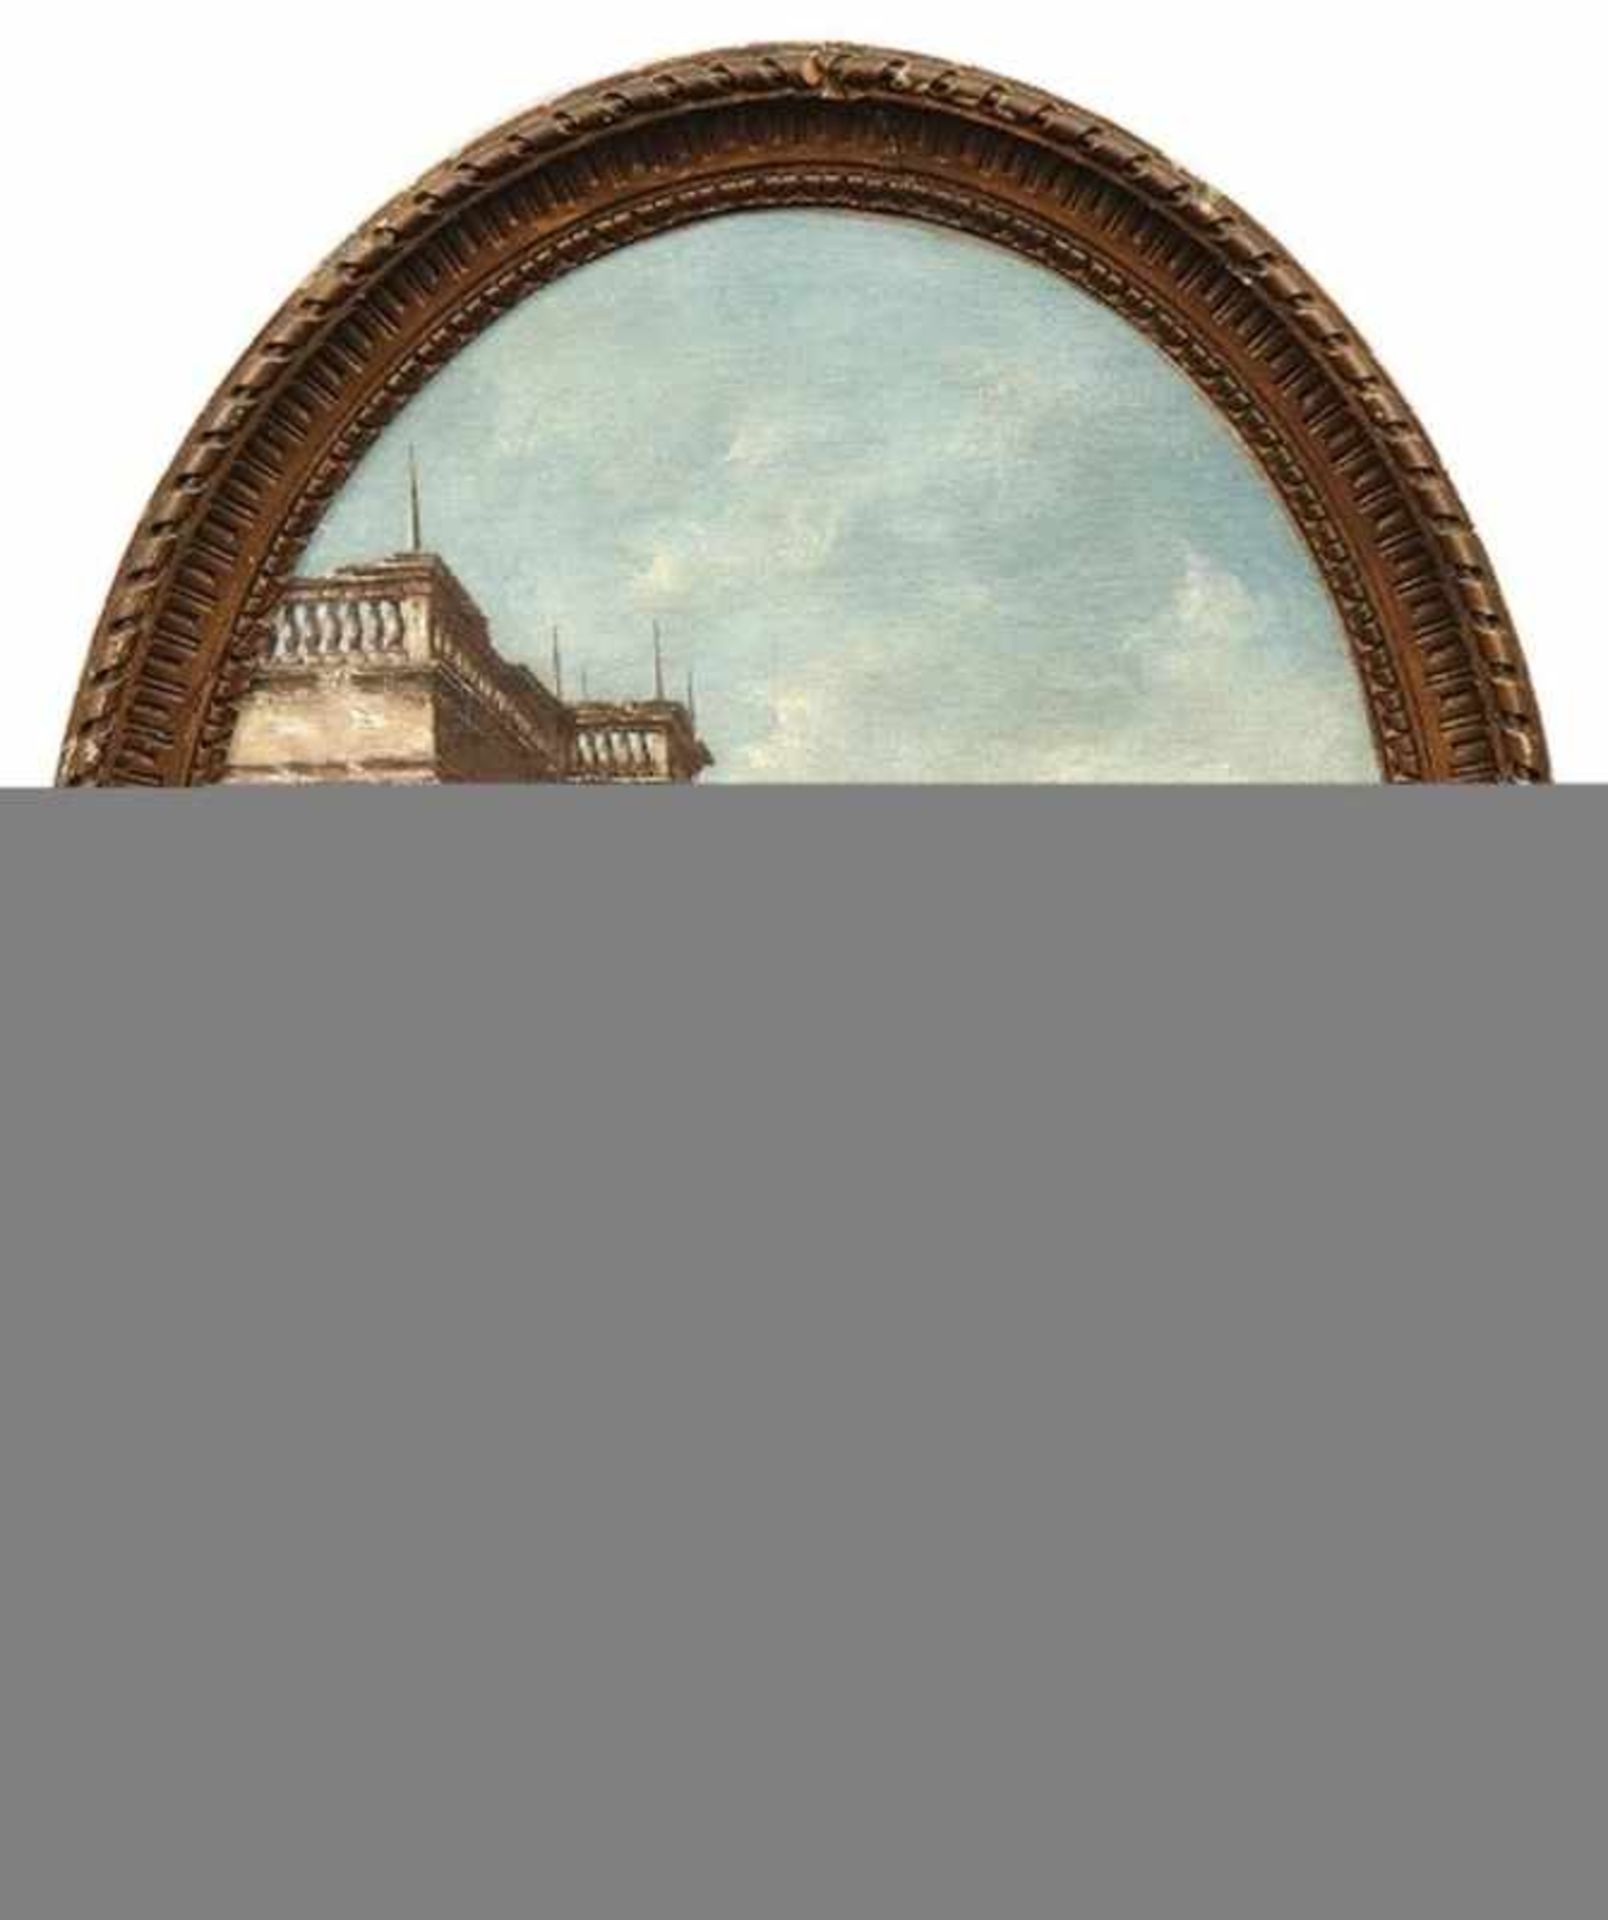 Guardi, Giacomo Paar venezianische Capriccios (Venedig 1764-1835) Vornehm gekleidete Personen vor